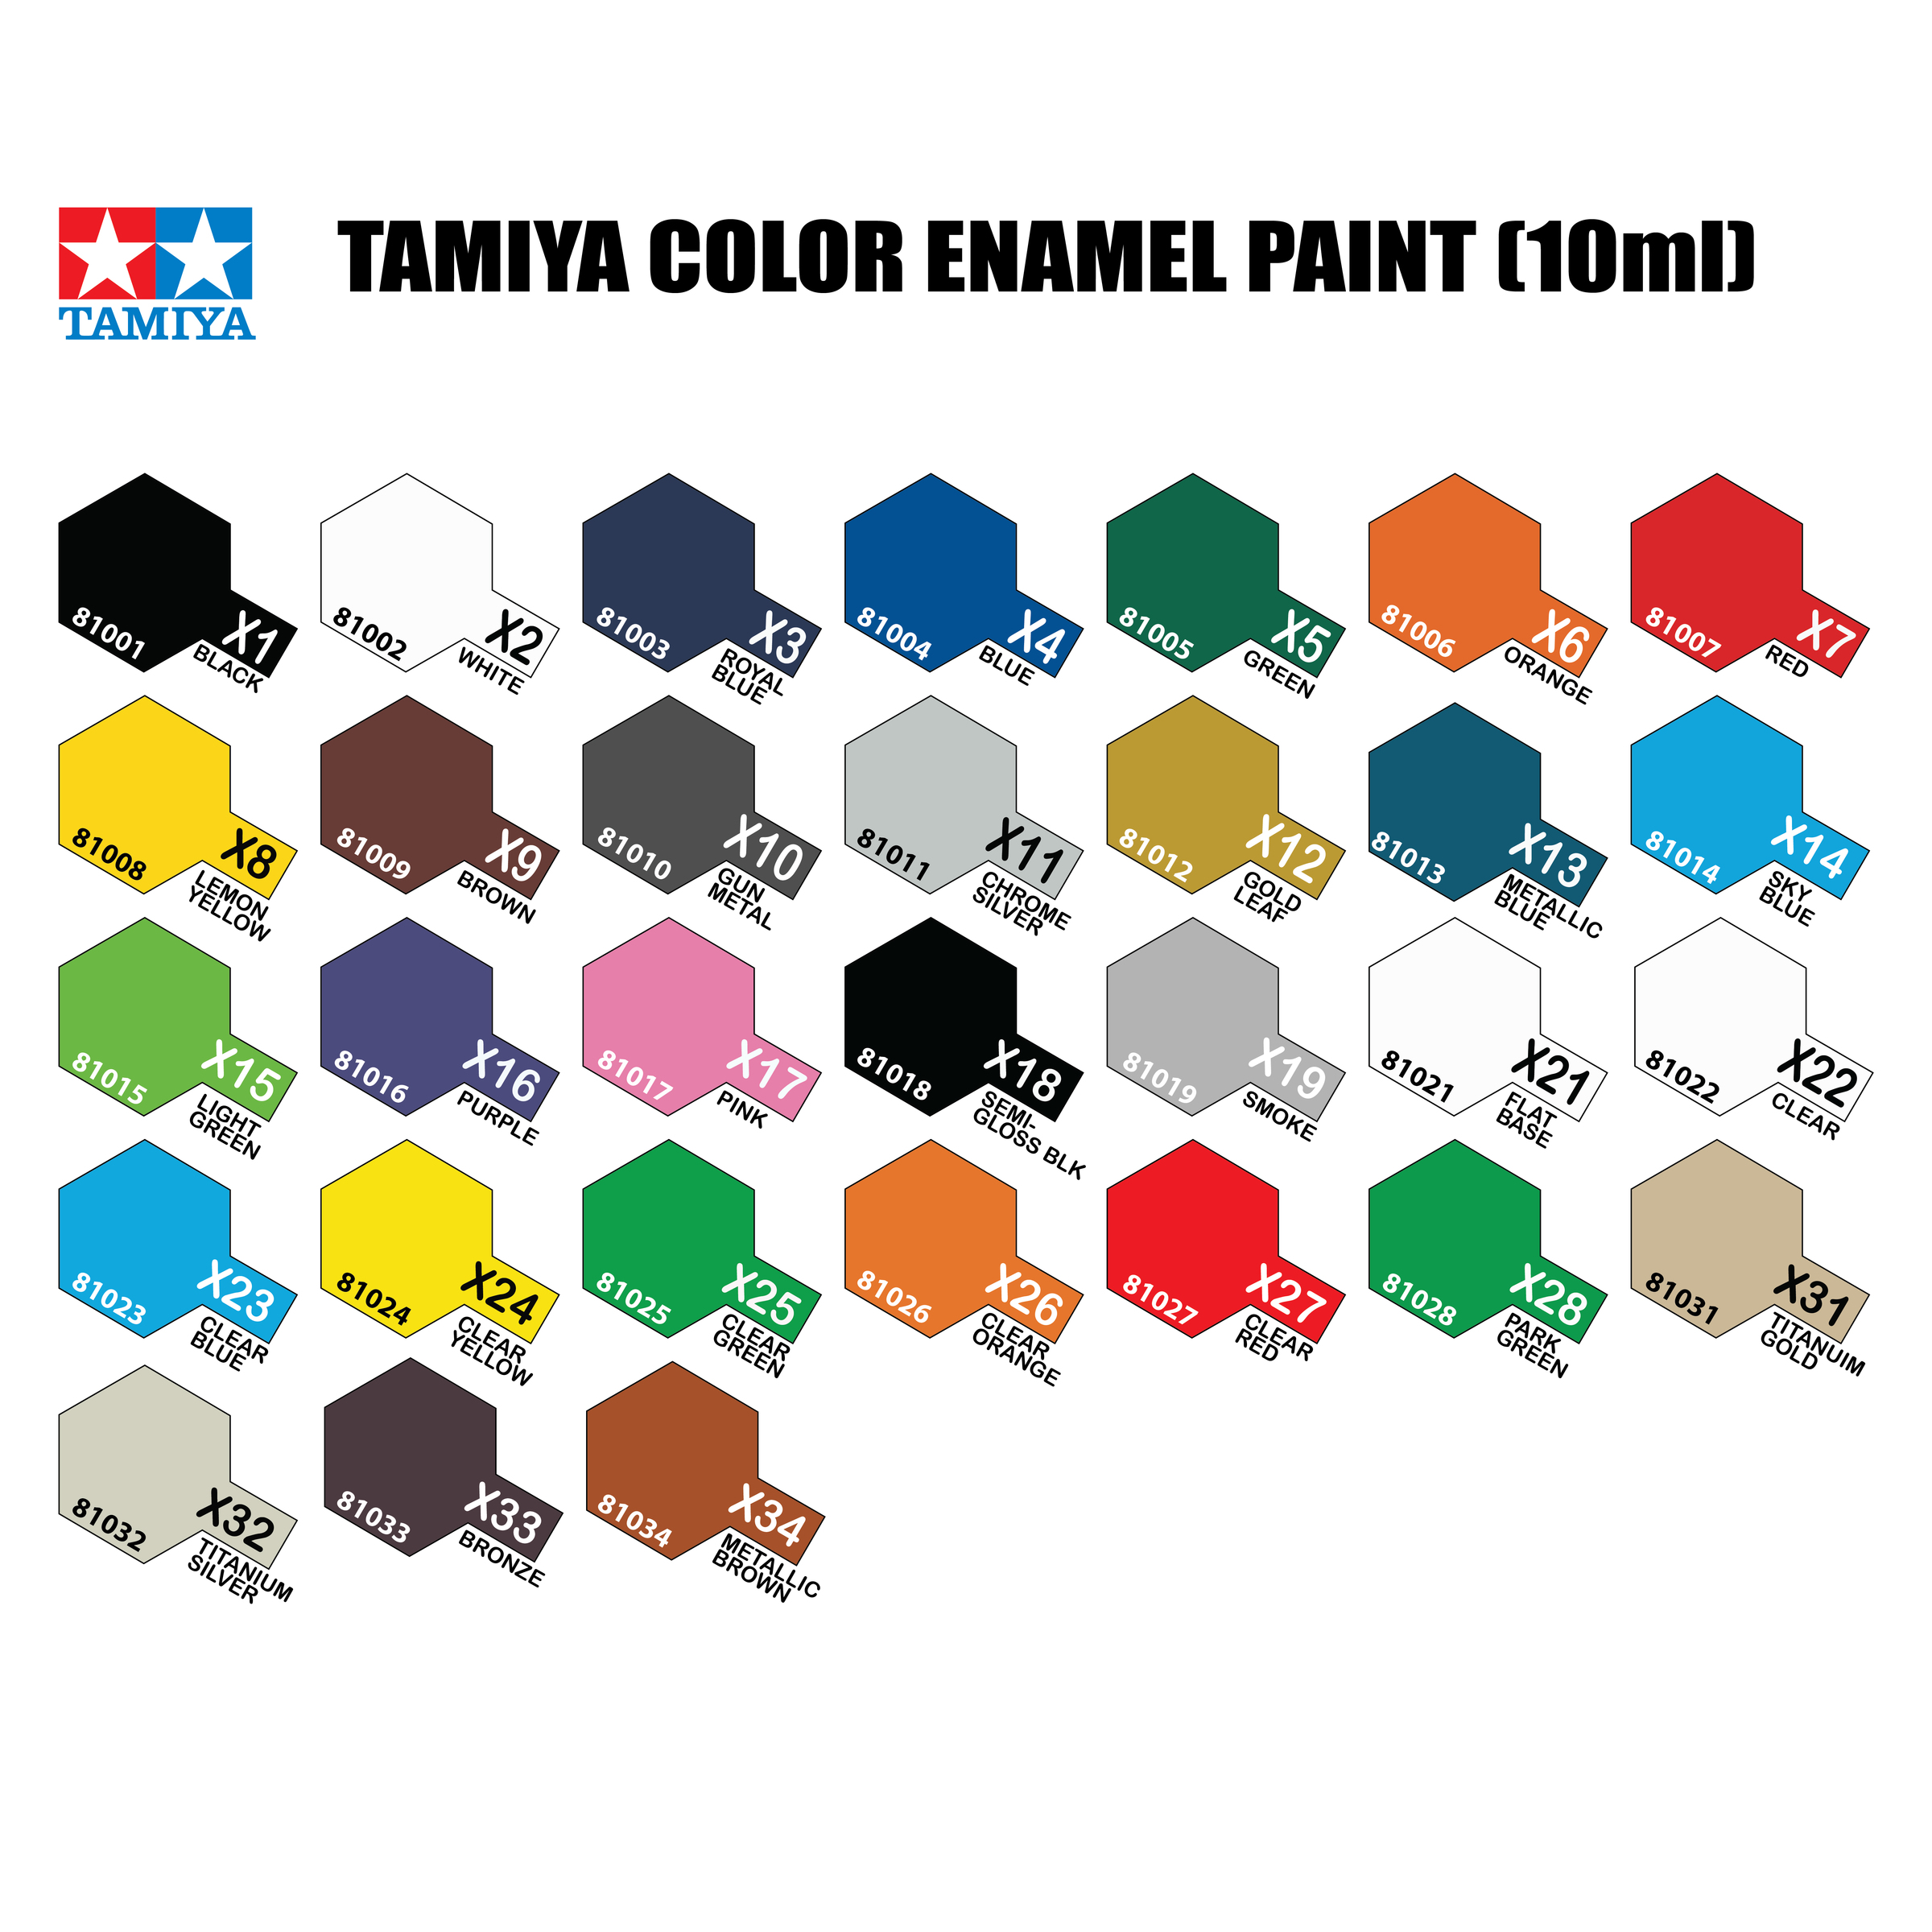 Tamiya Paint Color Chart Pdf